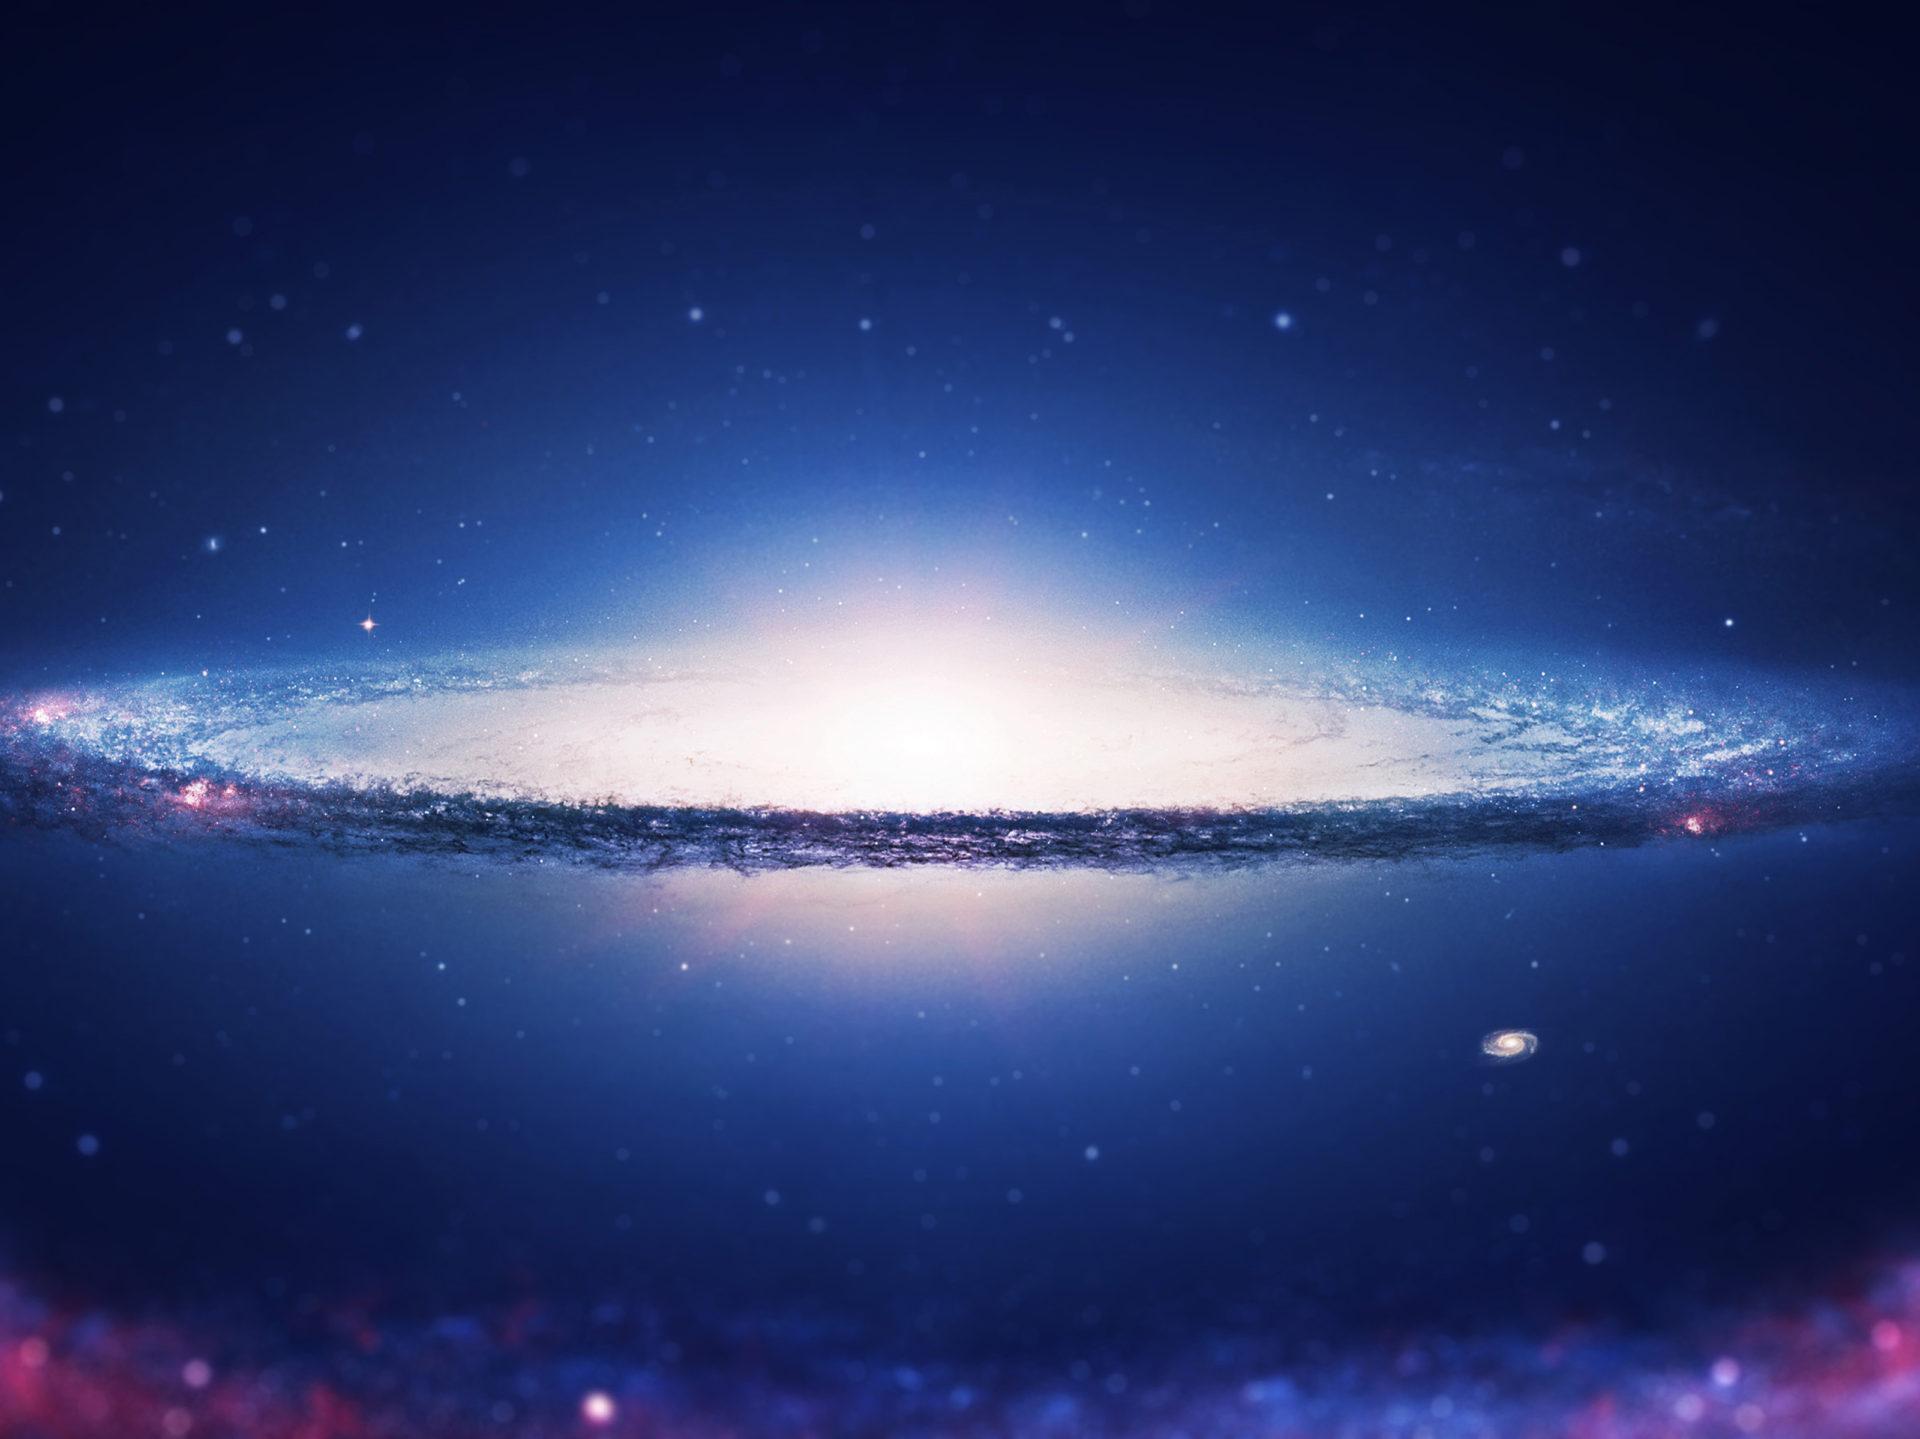 Universe Galaxy 4k Ultra HD Wallpaper For Desktop Tablet Mobile